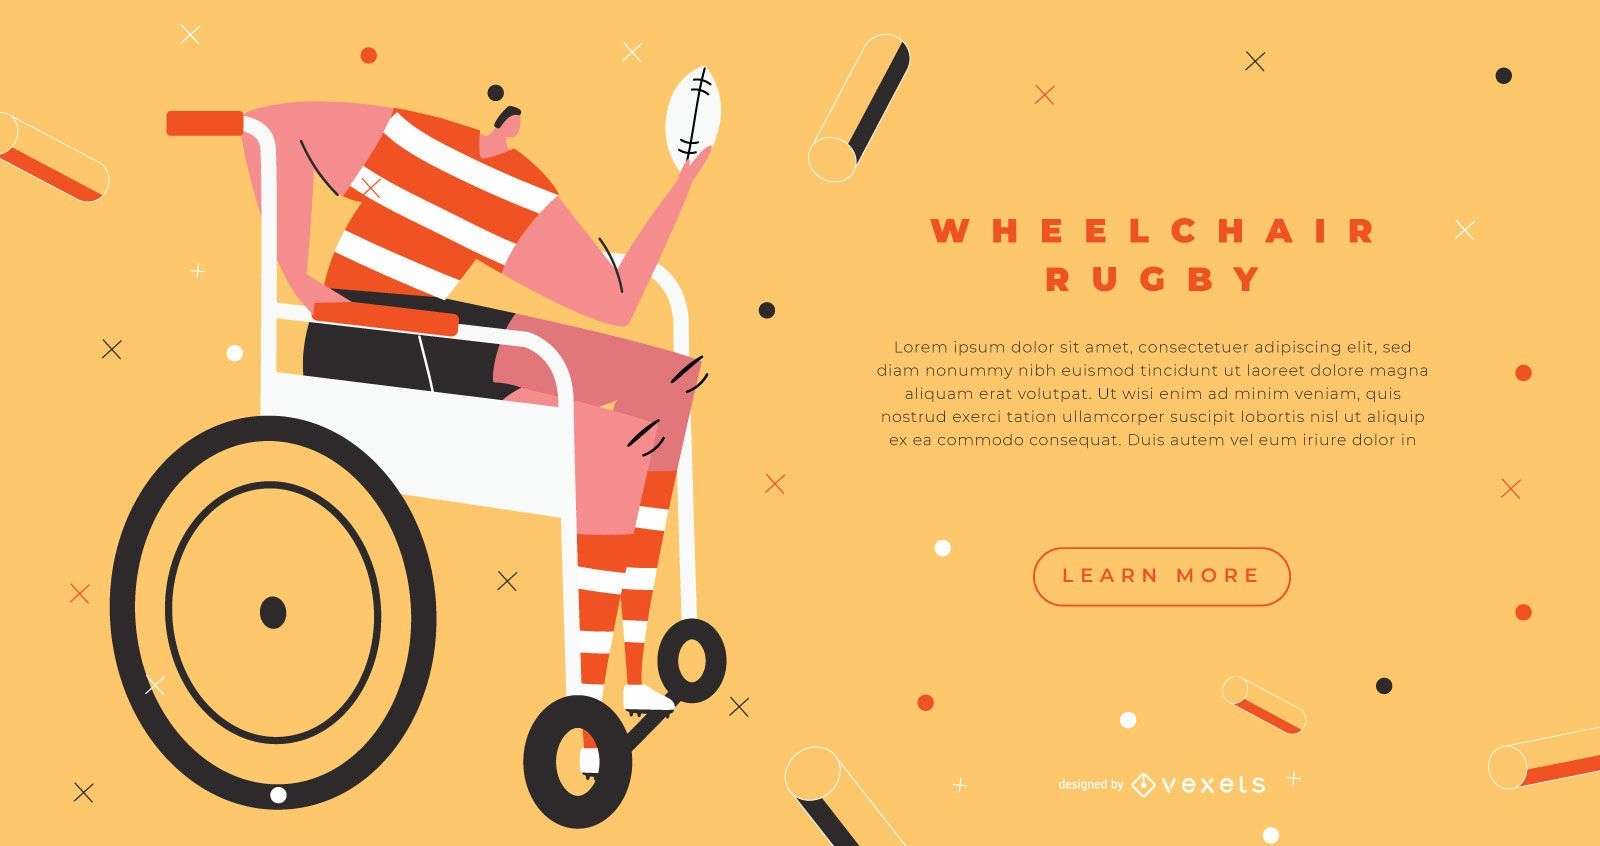 Rollstuhl Rugby Landing Page